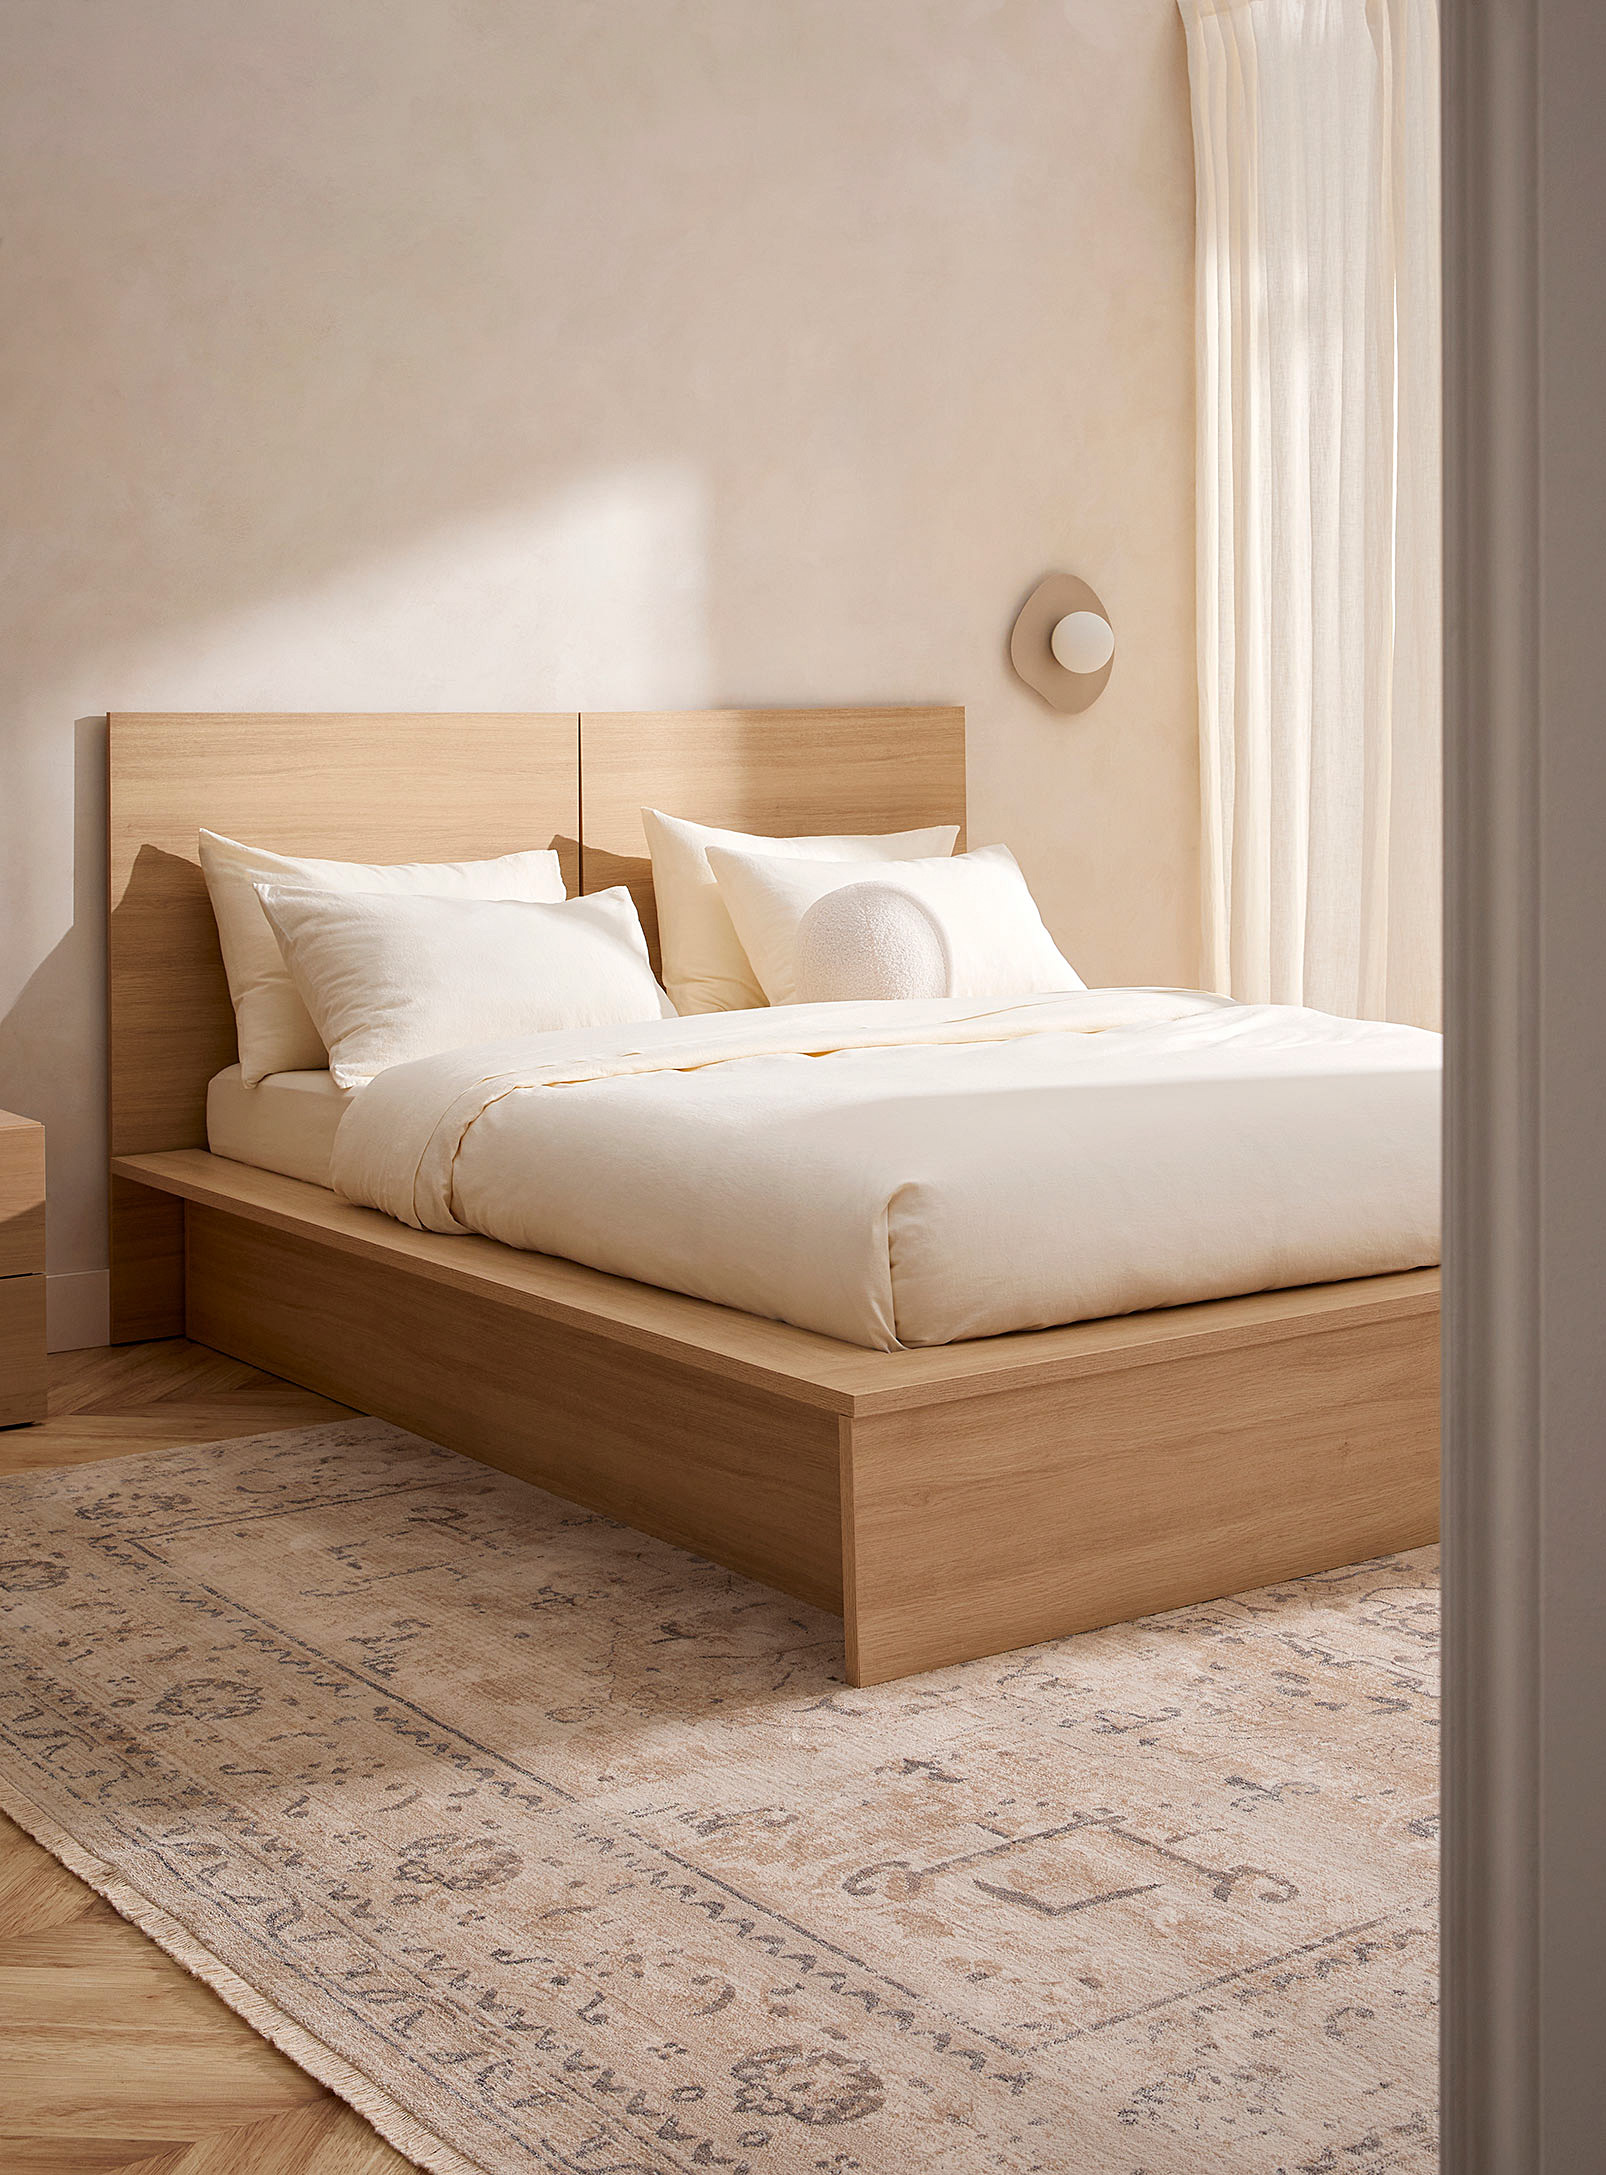 Simons Maison - Sleek oak platform bed frame See available sizes